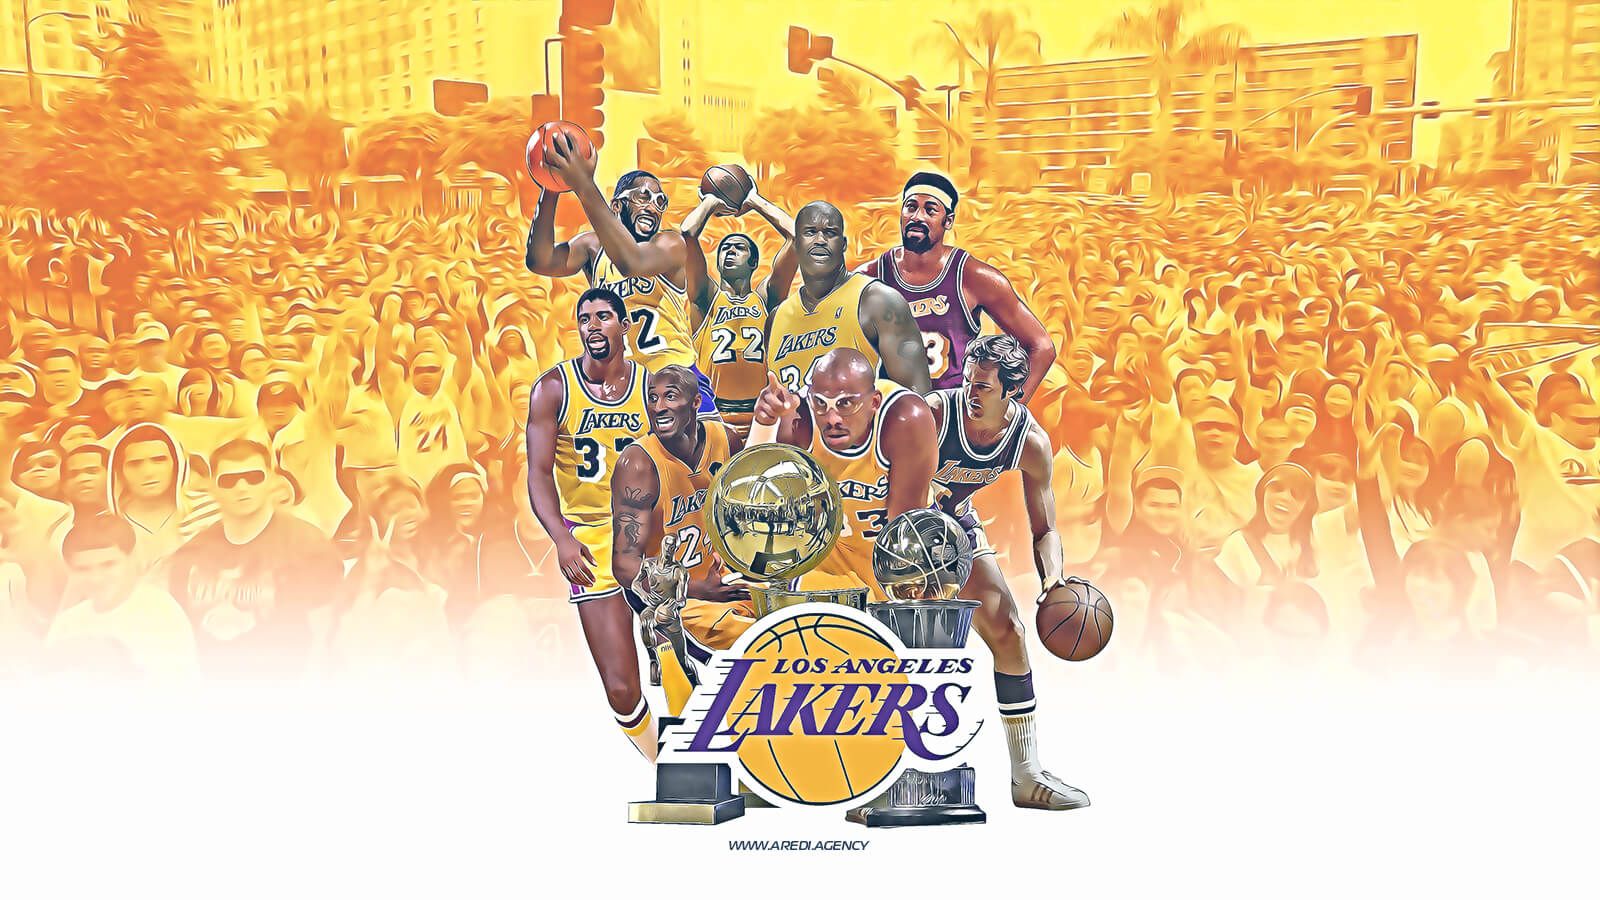 Los Angeles Lakers wallpaper design sport basketball champion